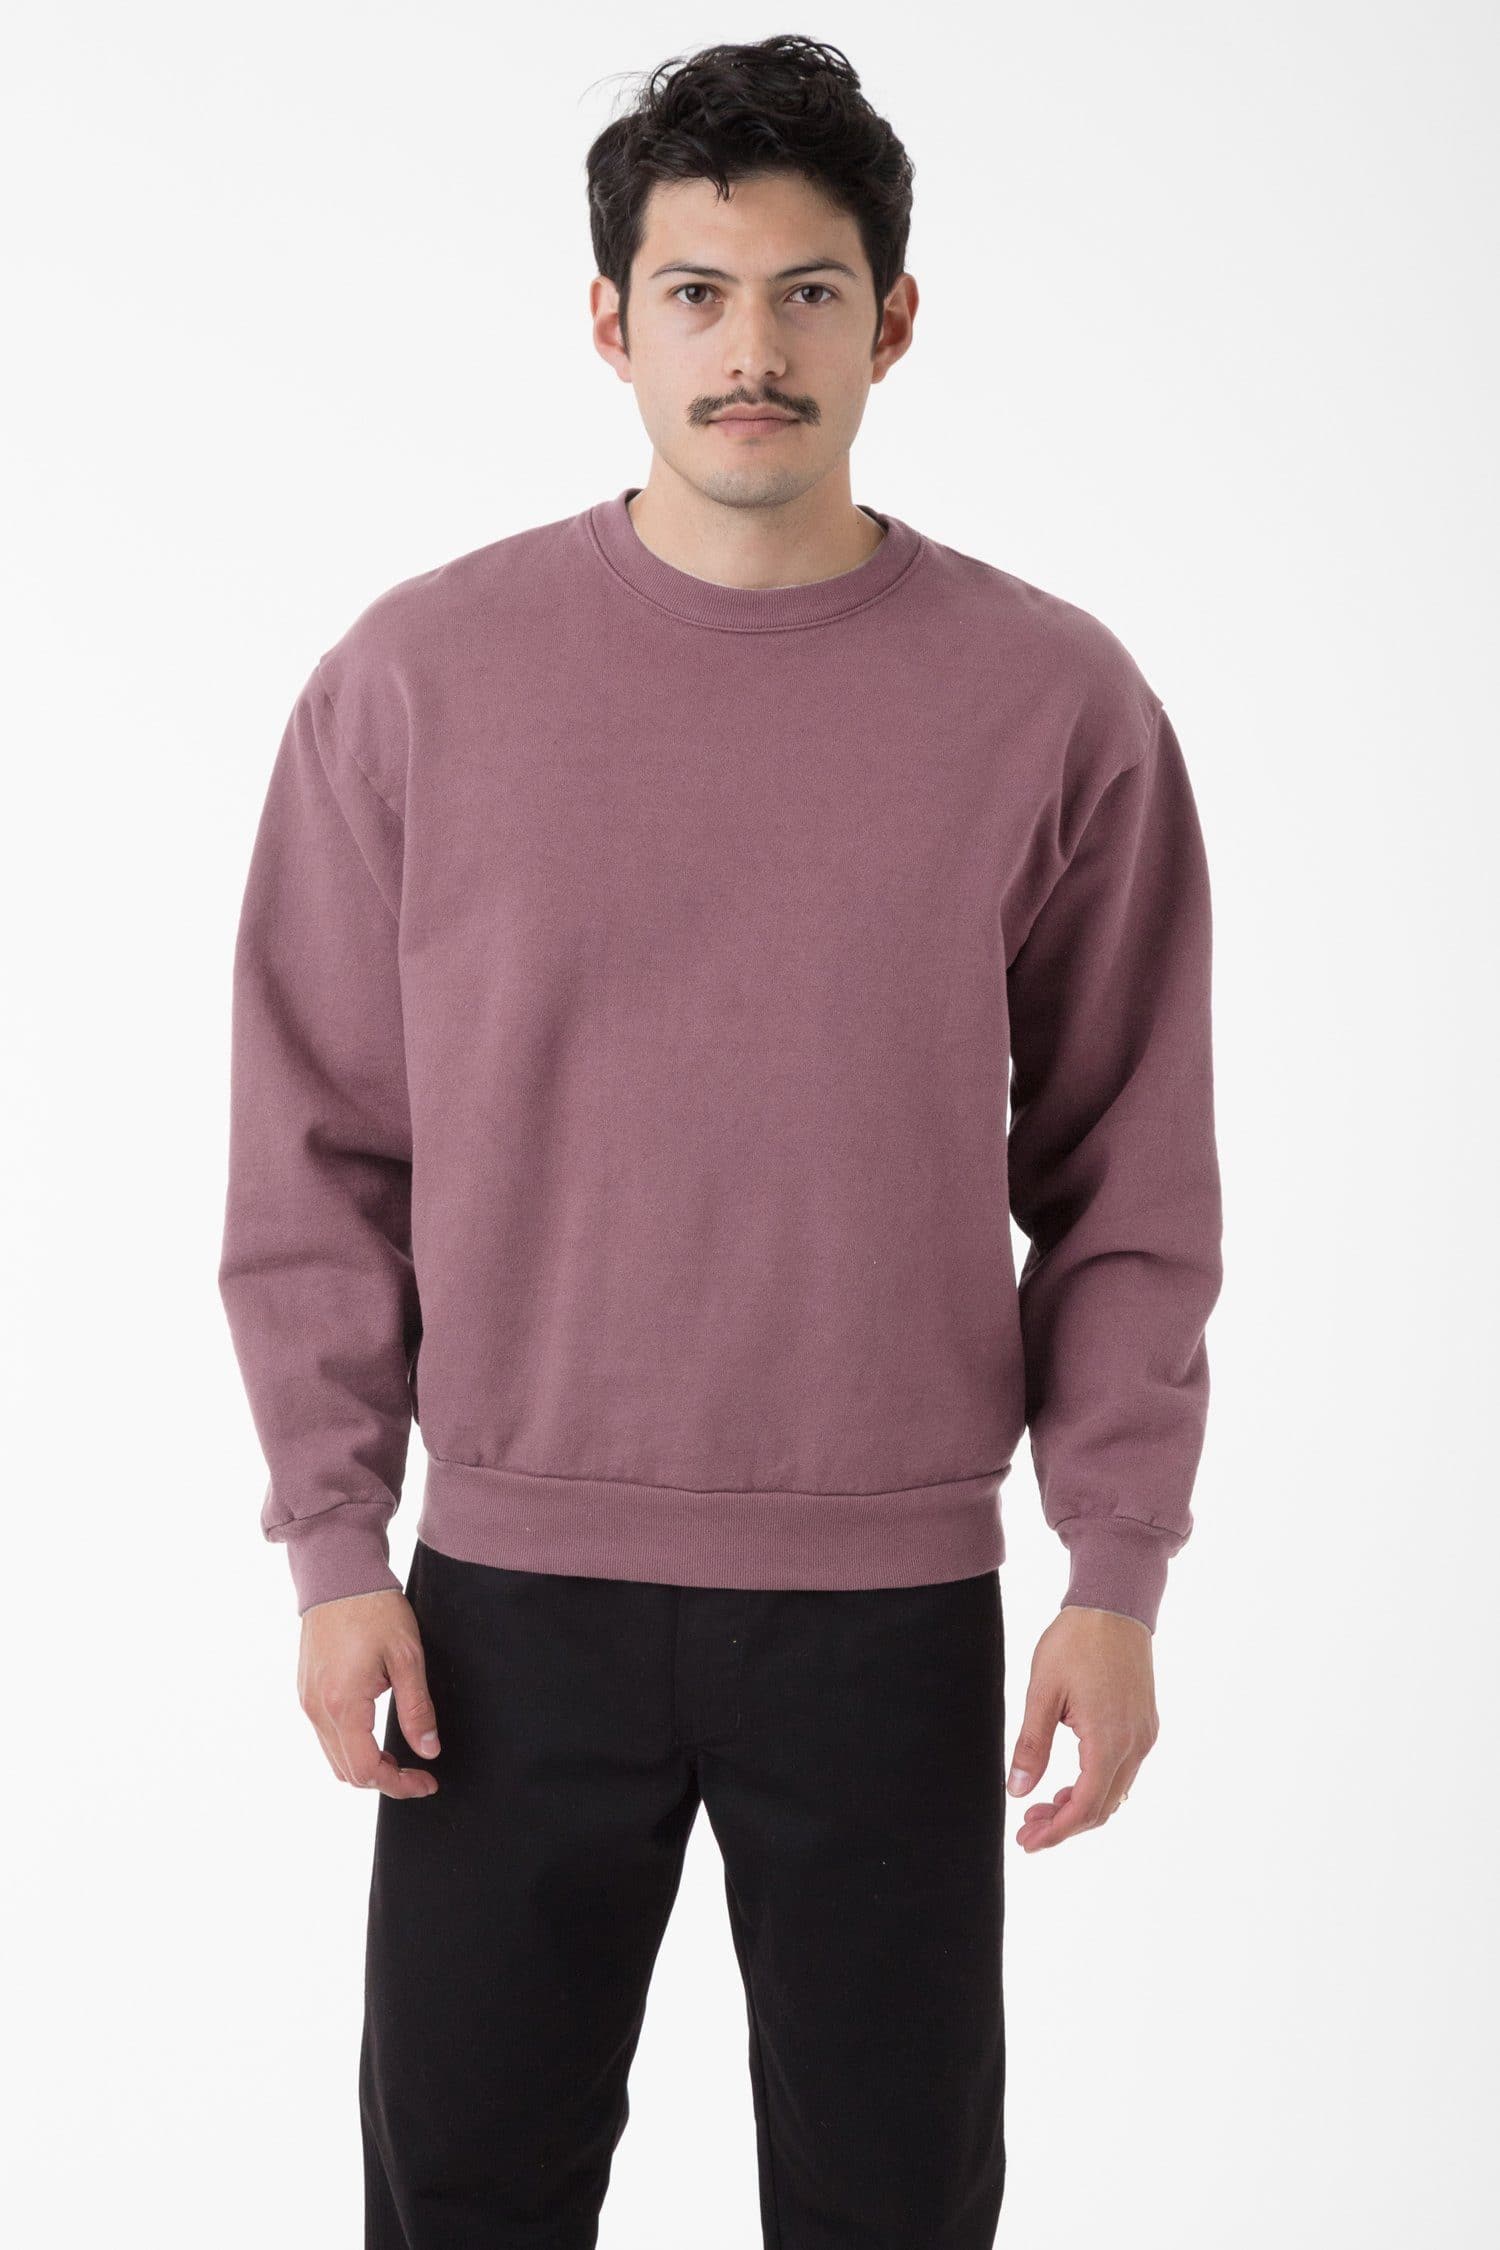 Cherry Los Angeles Logo-Appliquéd Garment-Dyed Cotton-jersey Hoodie - Men - Tan Sweats - M